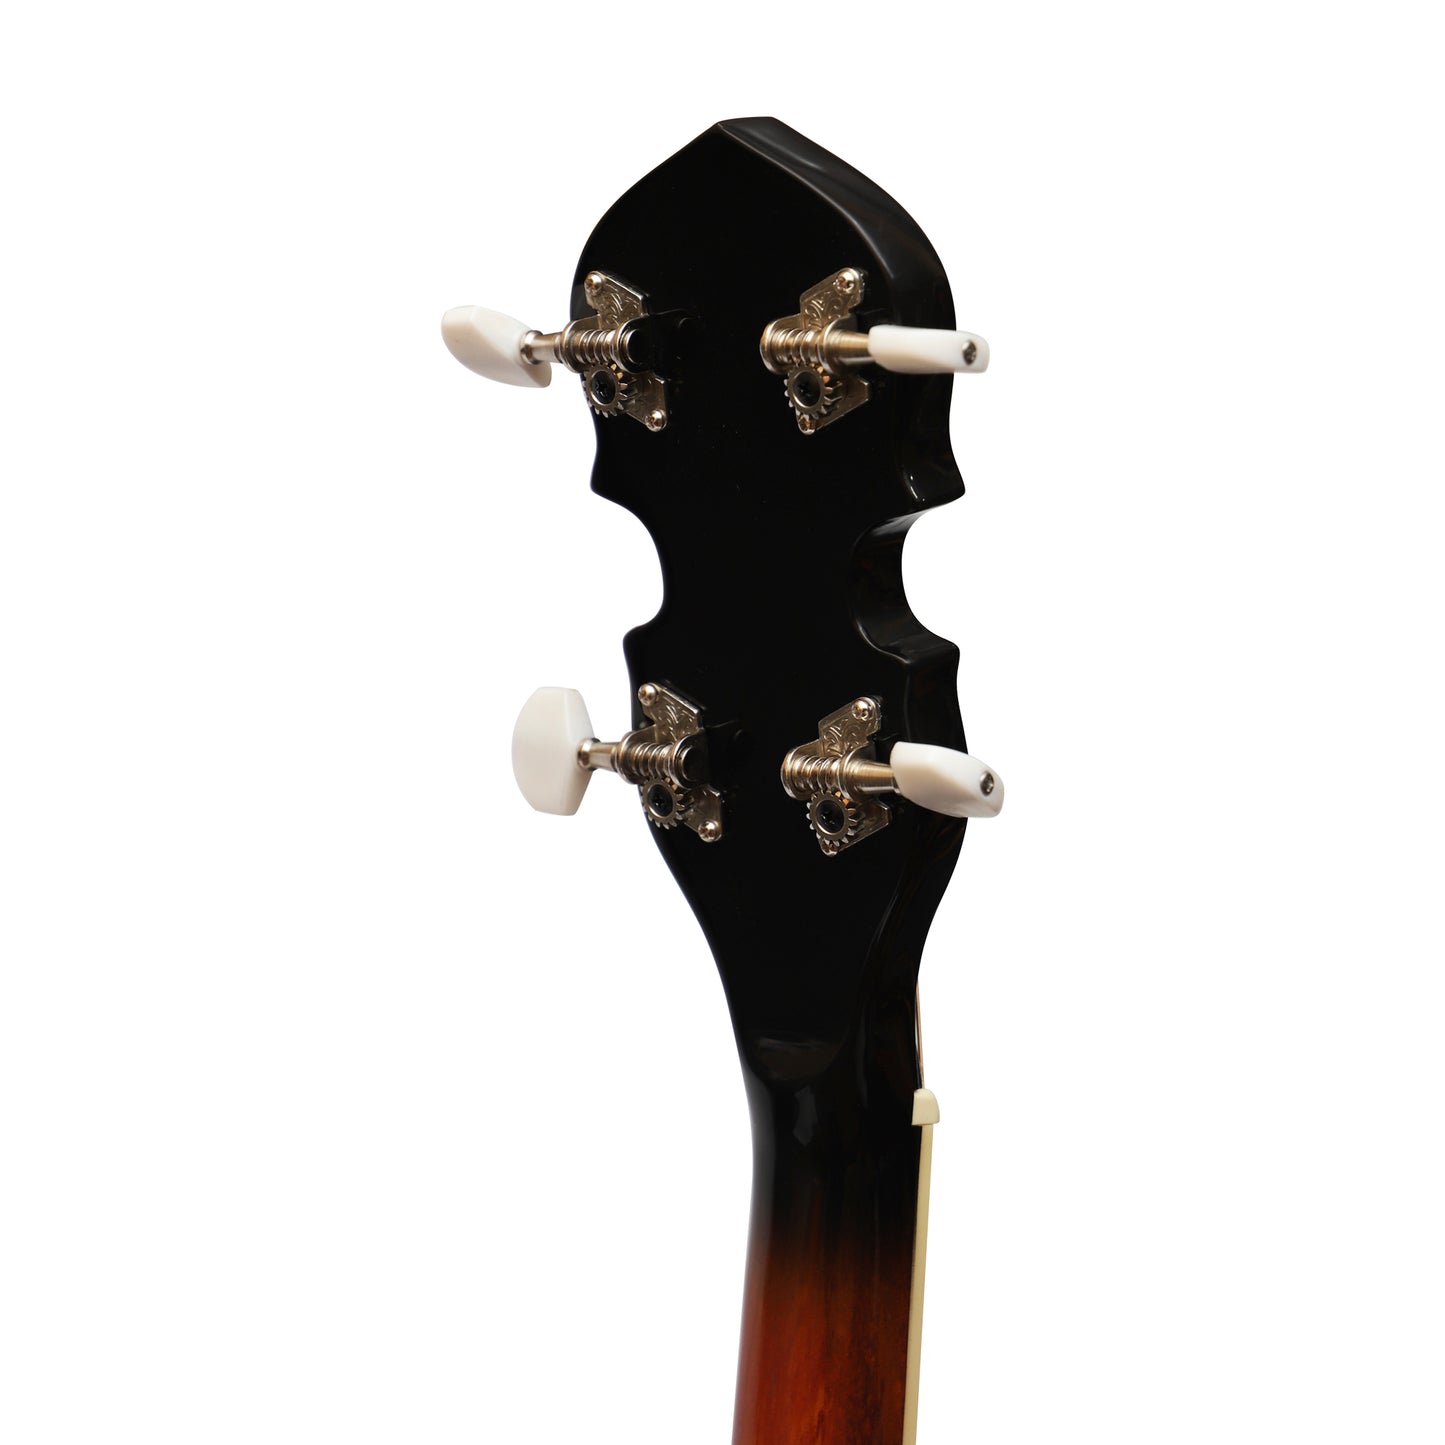 Heartland 4 String 19 Fret Irish Tenor Banjo Player Series with Closed Solid Back Sunburst Finish